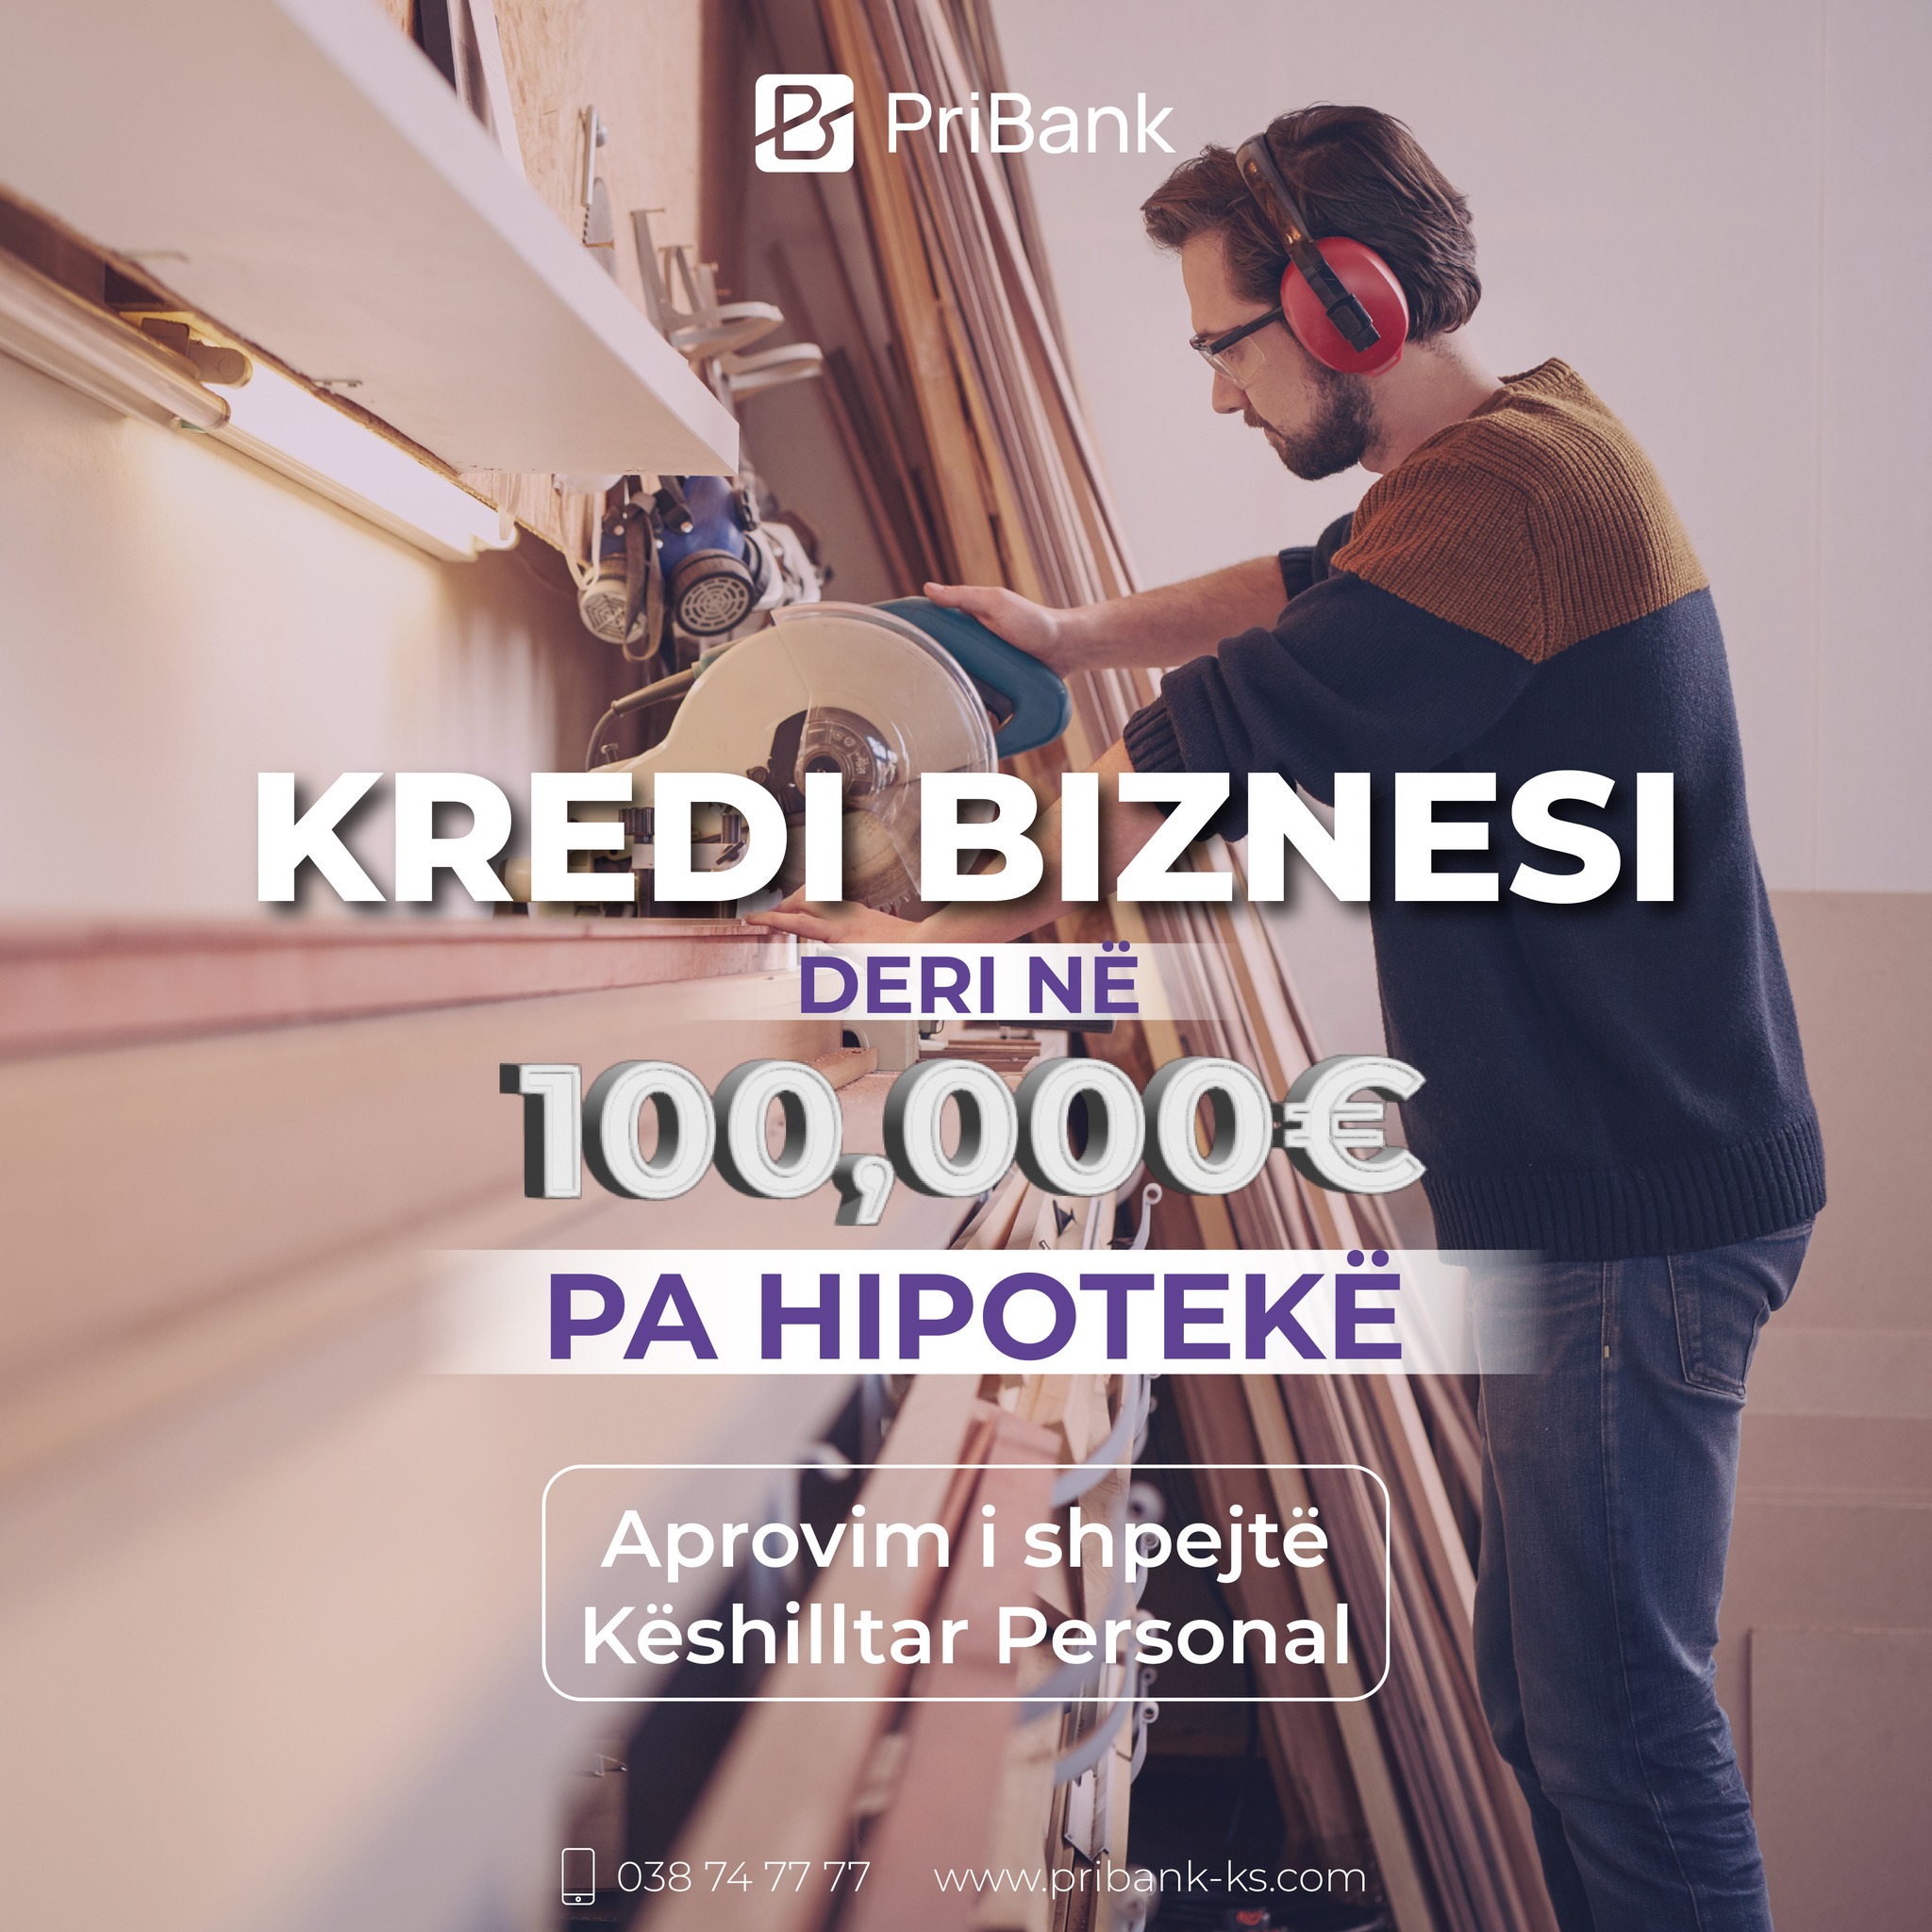 Krediti BEZ HIPOTEKE do 100.000 EUR